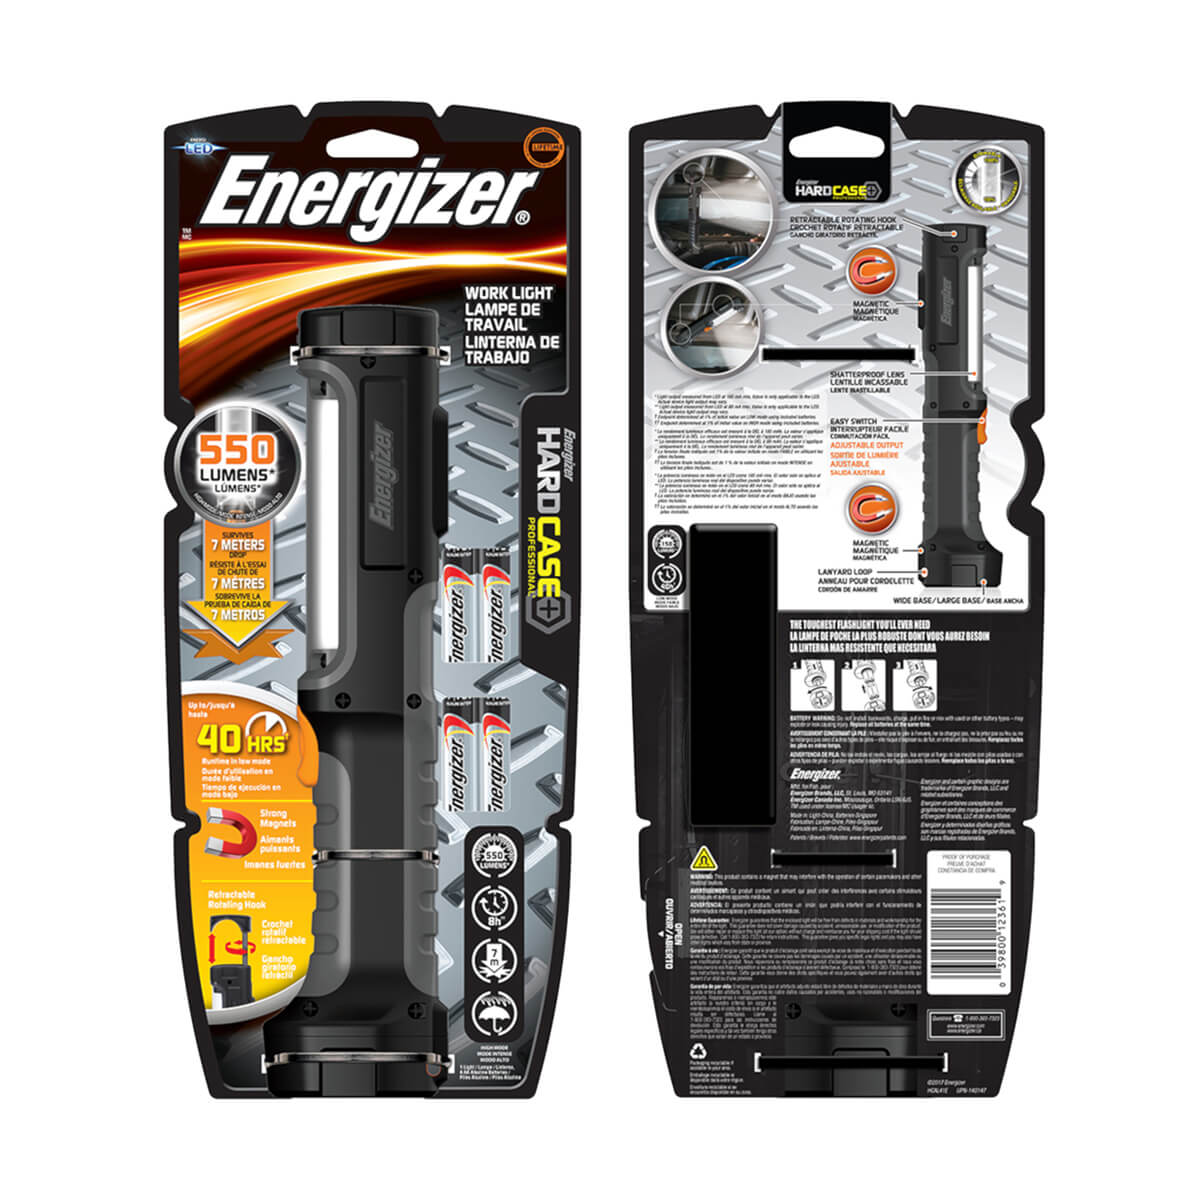 Energizer Hard Case Professional Work Light - 550 Lumens